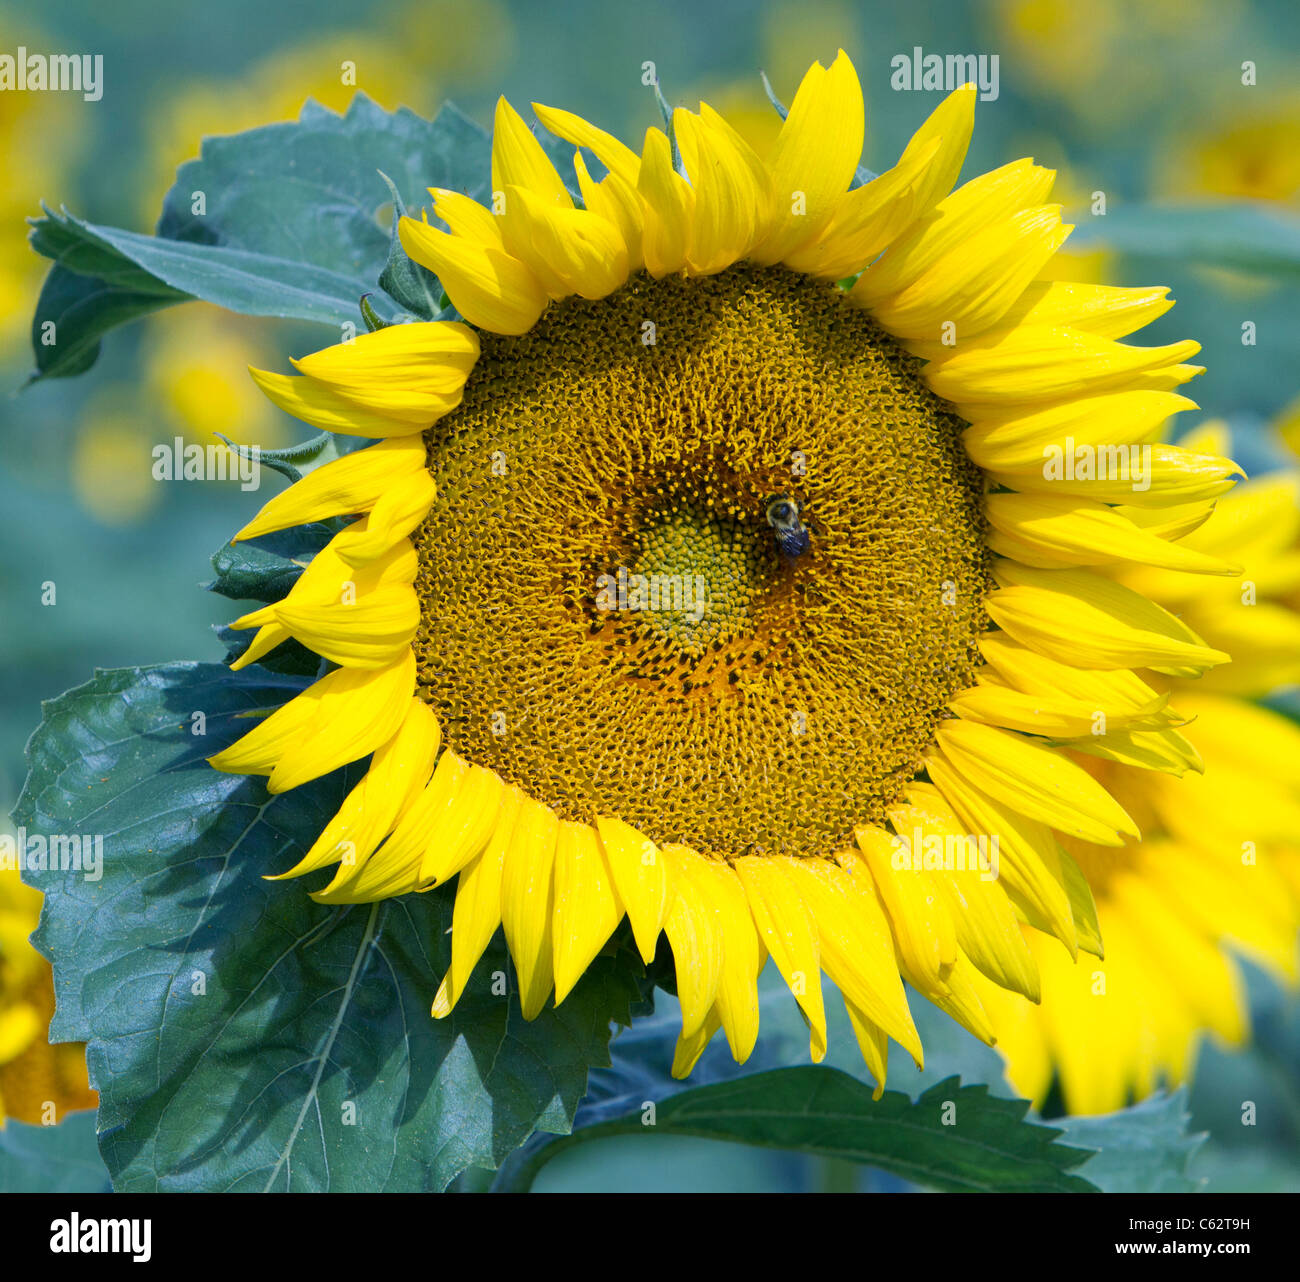 Sunflower Helianthus annuus an annual plant. Stock Photo